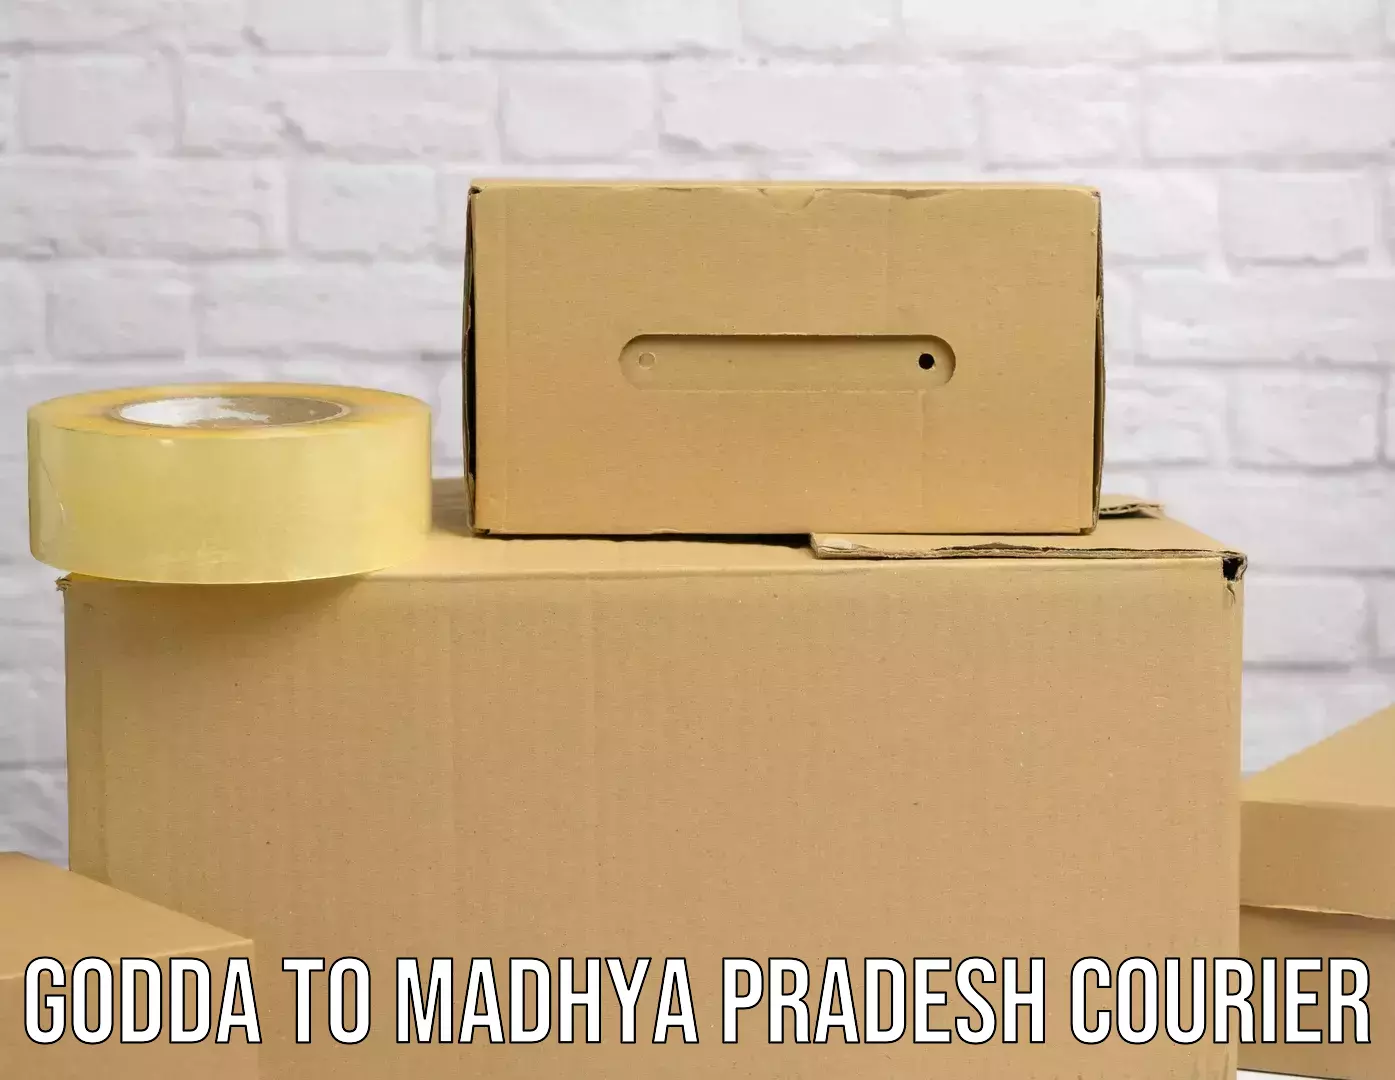 End-to-end delivery Godda to Sleemanabad